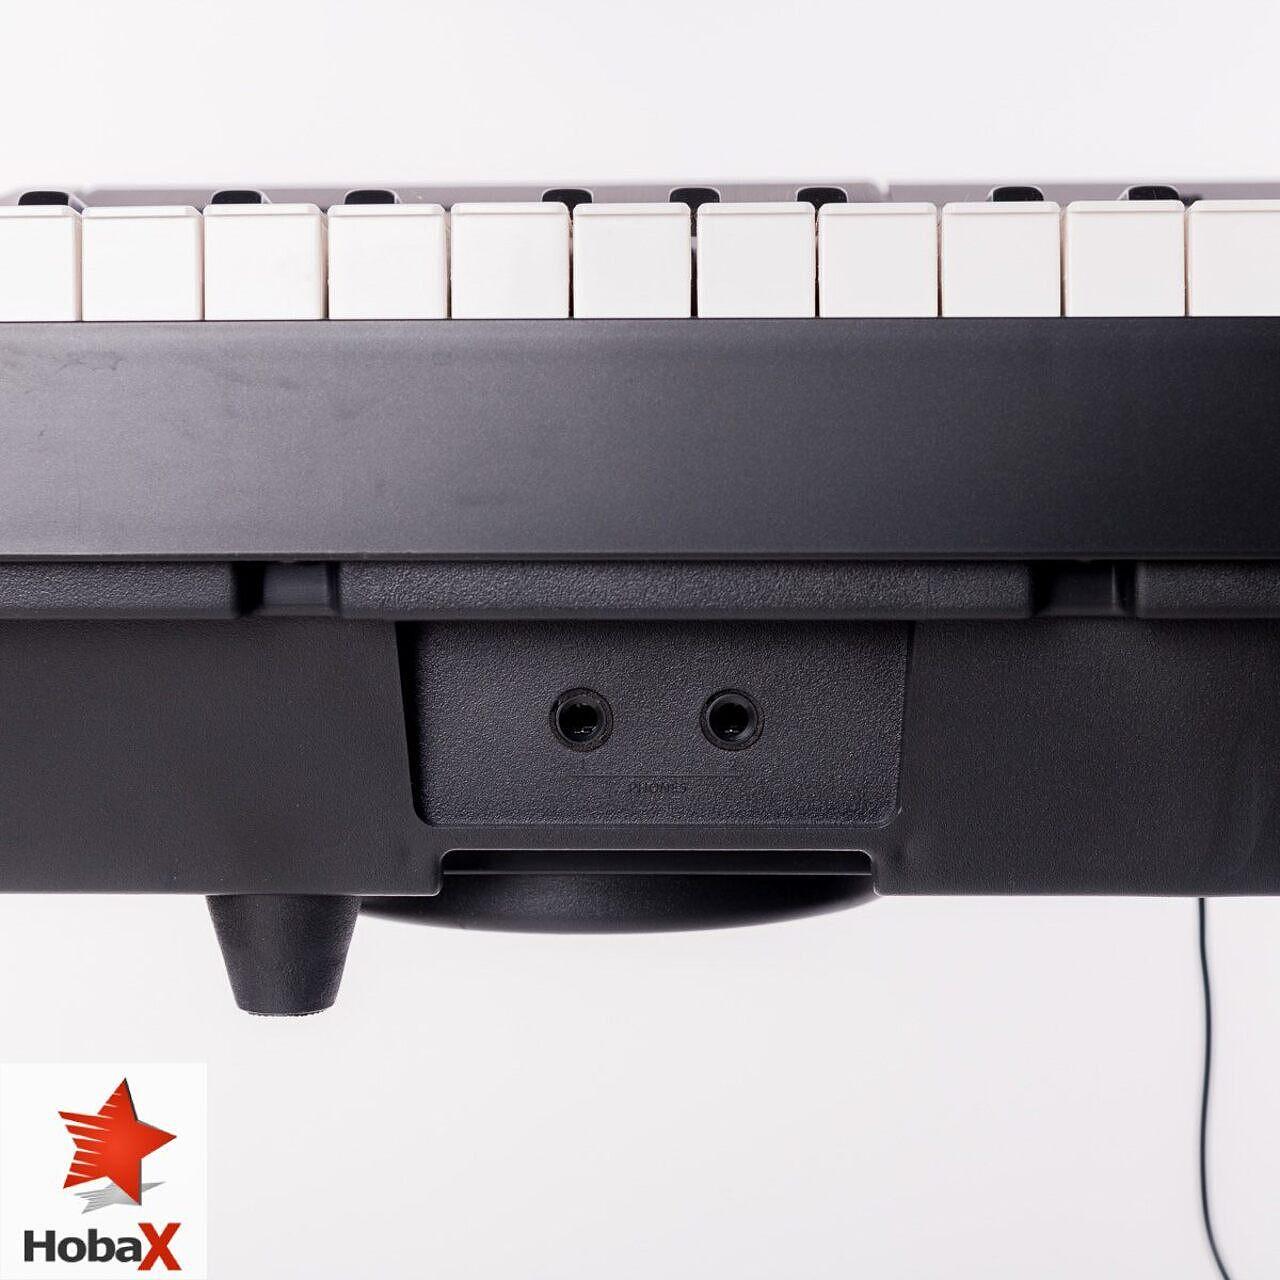 Комплект Пиано HOBAX S-192, 88 клавиша, HAMMER ACTION тежка клавиатура 7 октави, 8 звуци, 128 ритми, стойка за ноти, SUSTAIN педал + 3 ПОДАРЪКА - слушалки, стикери за клавиши и х стойка